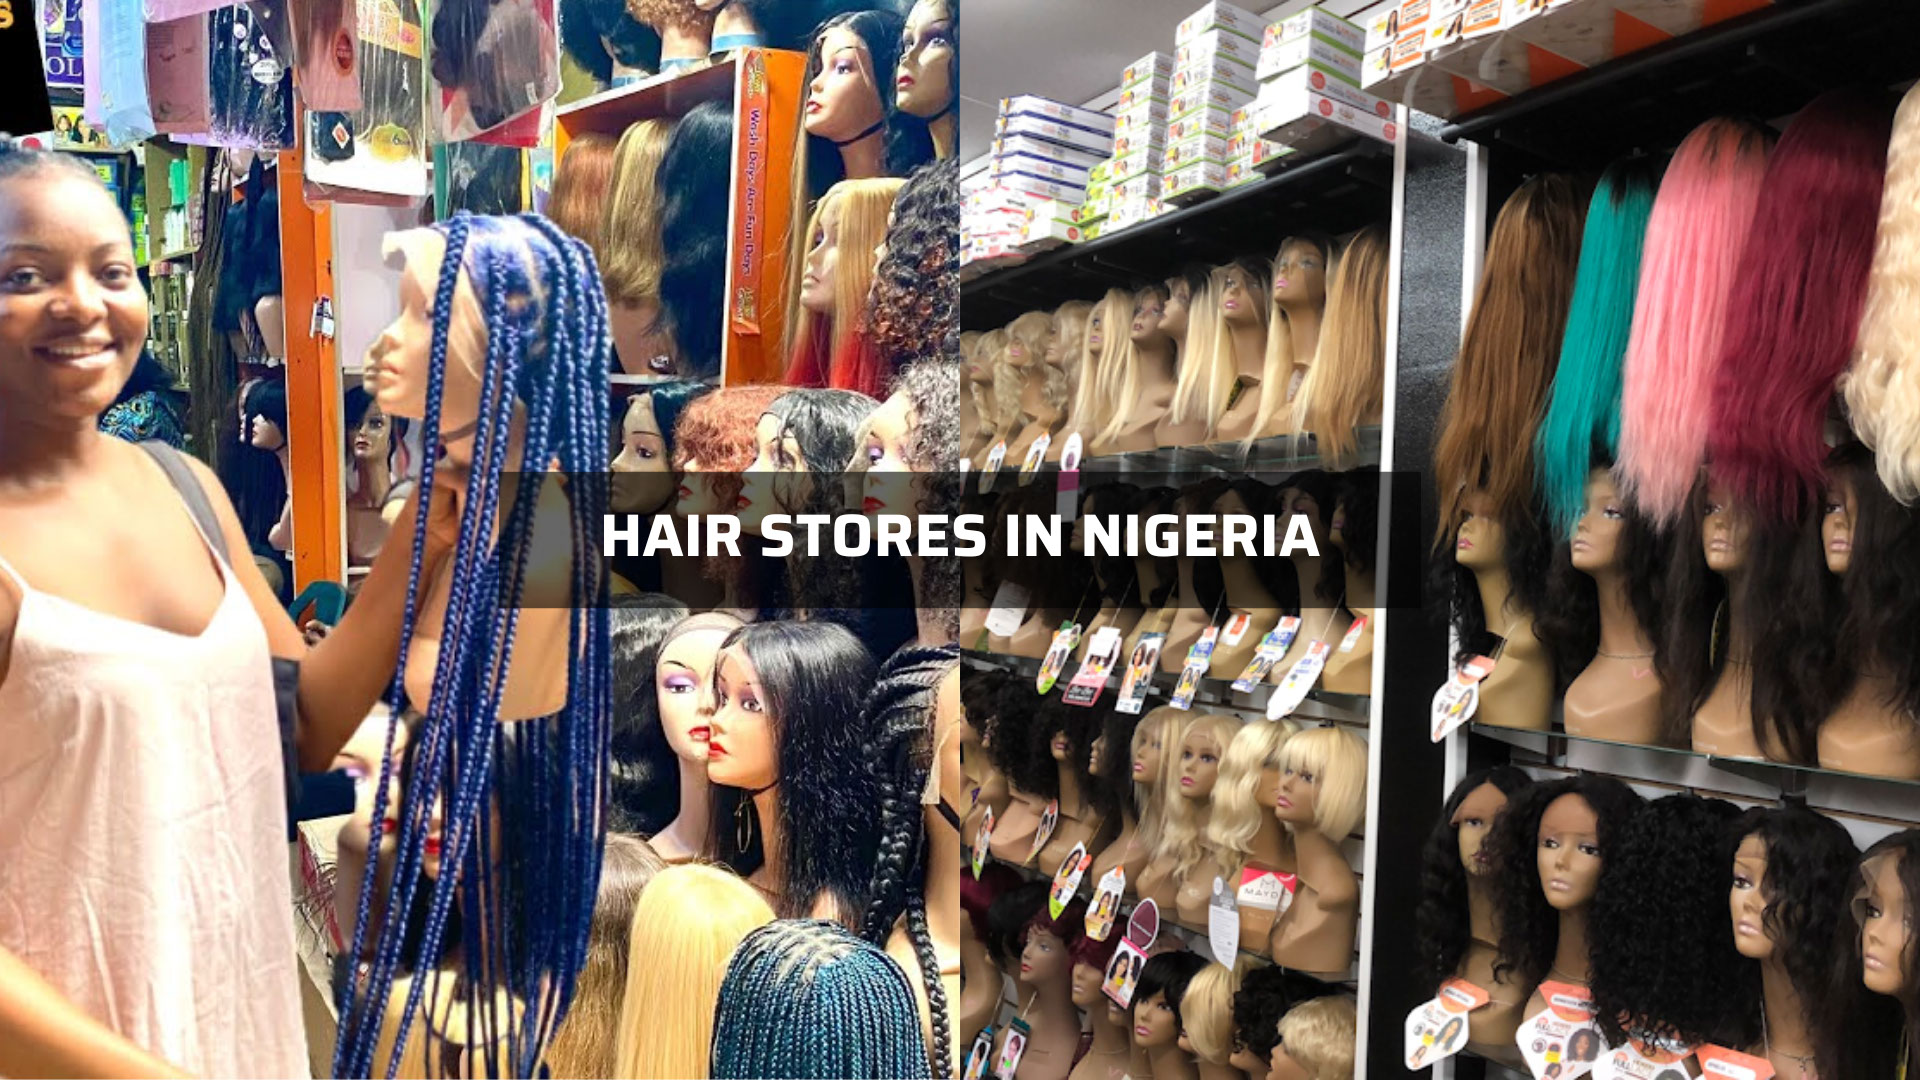 Hair stores in Nigeria